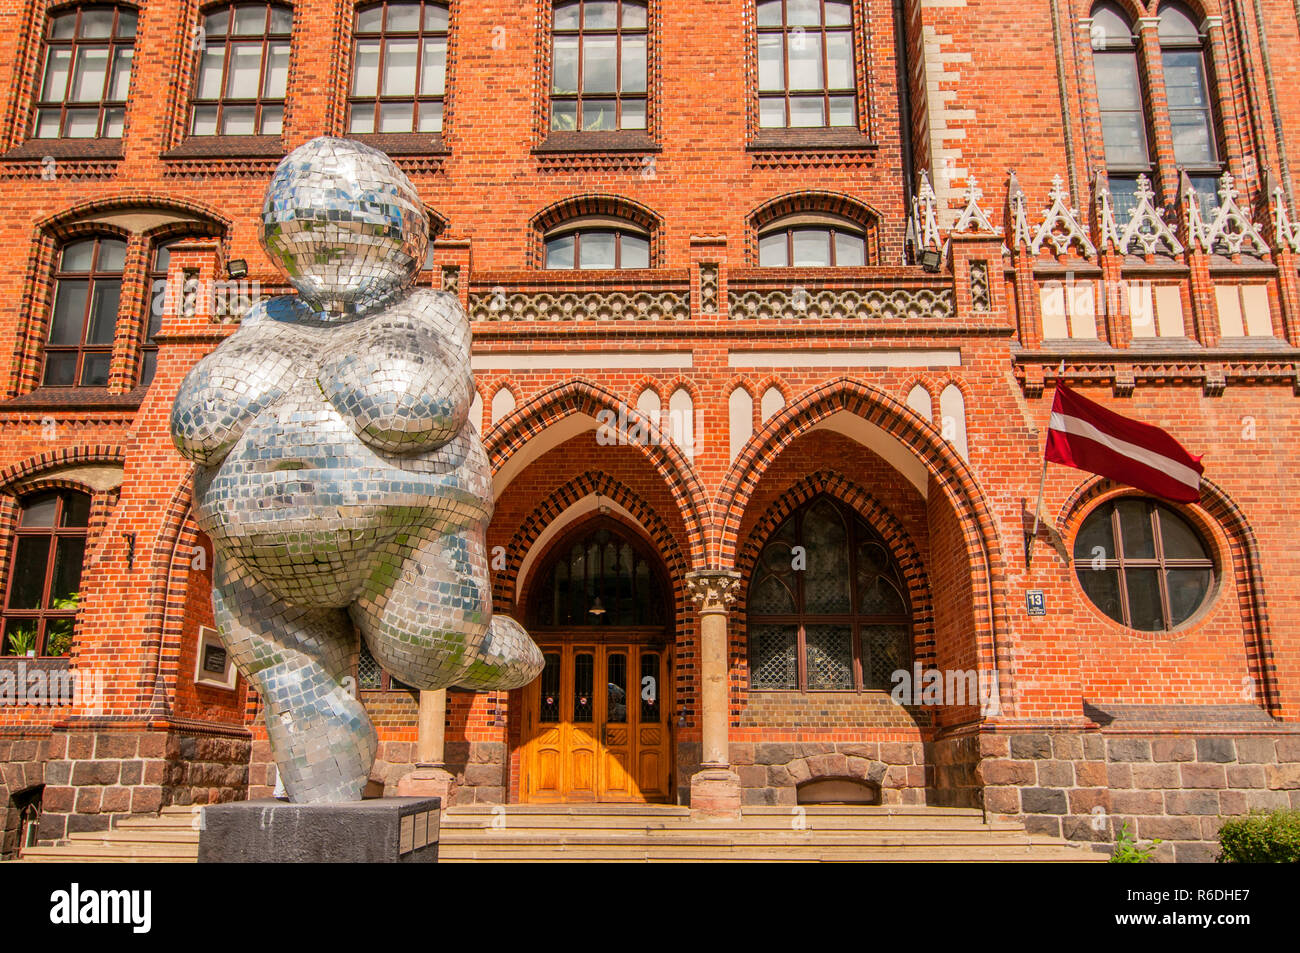 View Of Willendorf Venus Sculpture Near Latvian Academy Of Arts In Riga, Latvia Stock Photo